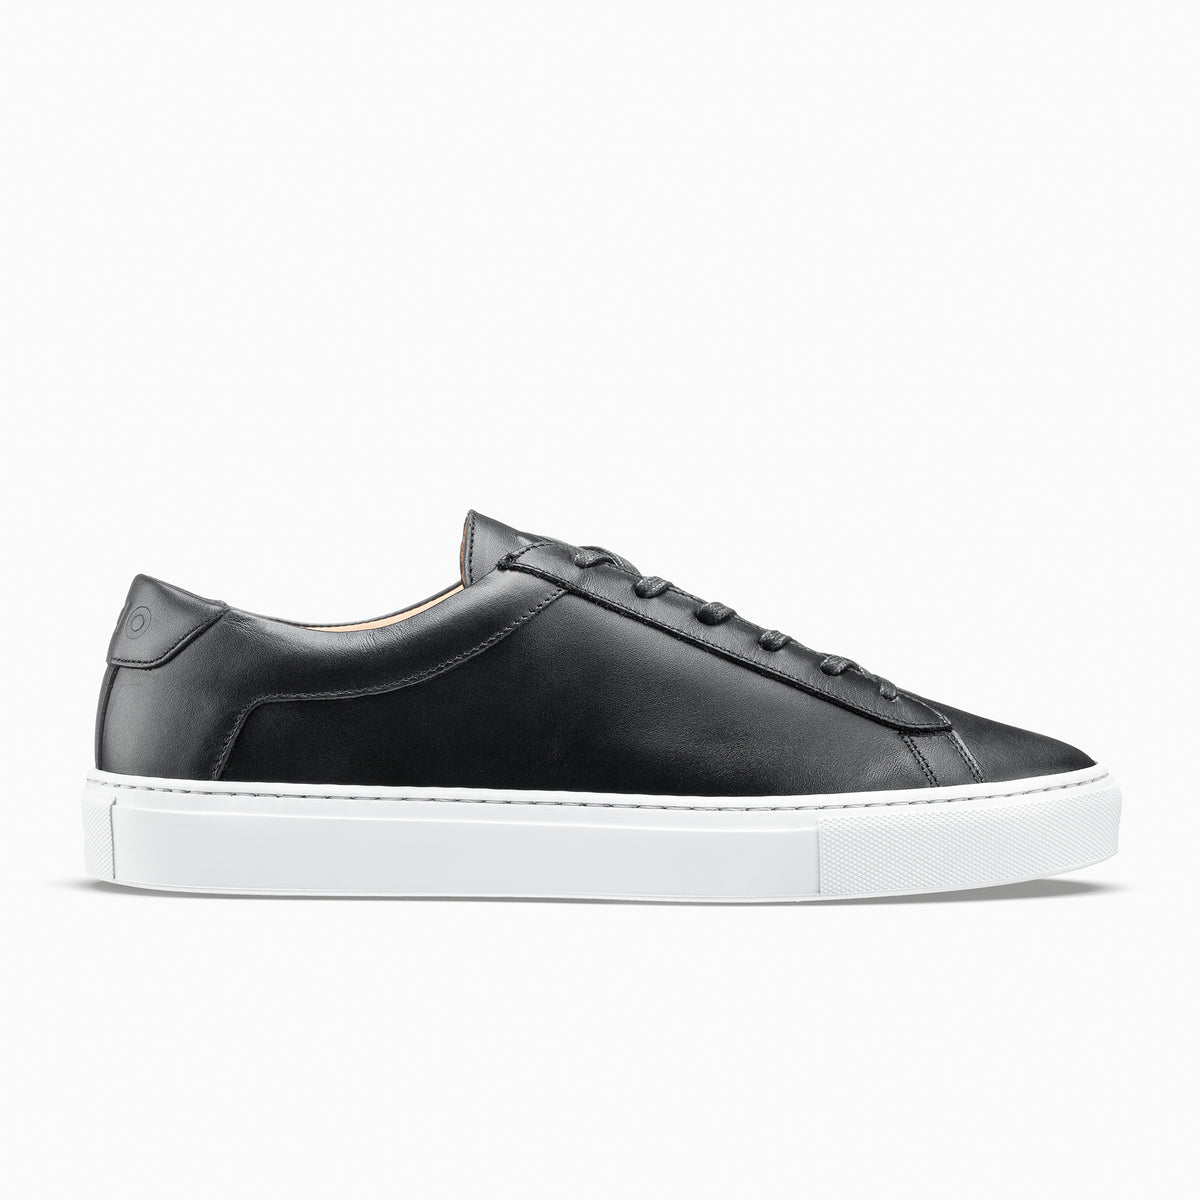 Koio Capri Men's Sneakers Black | Singapore-720315